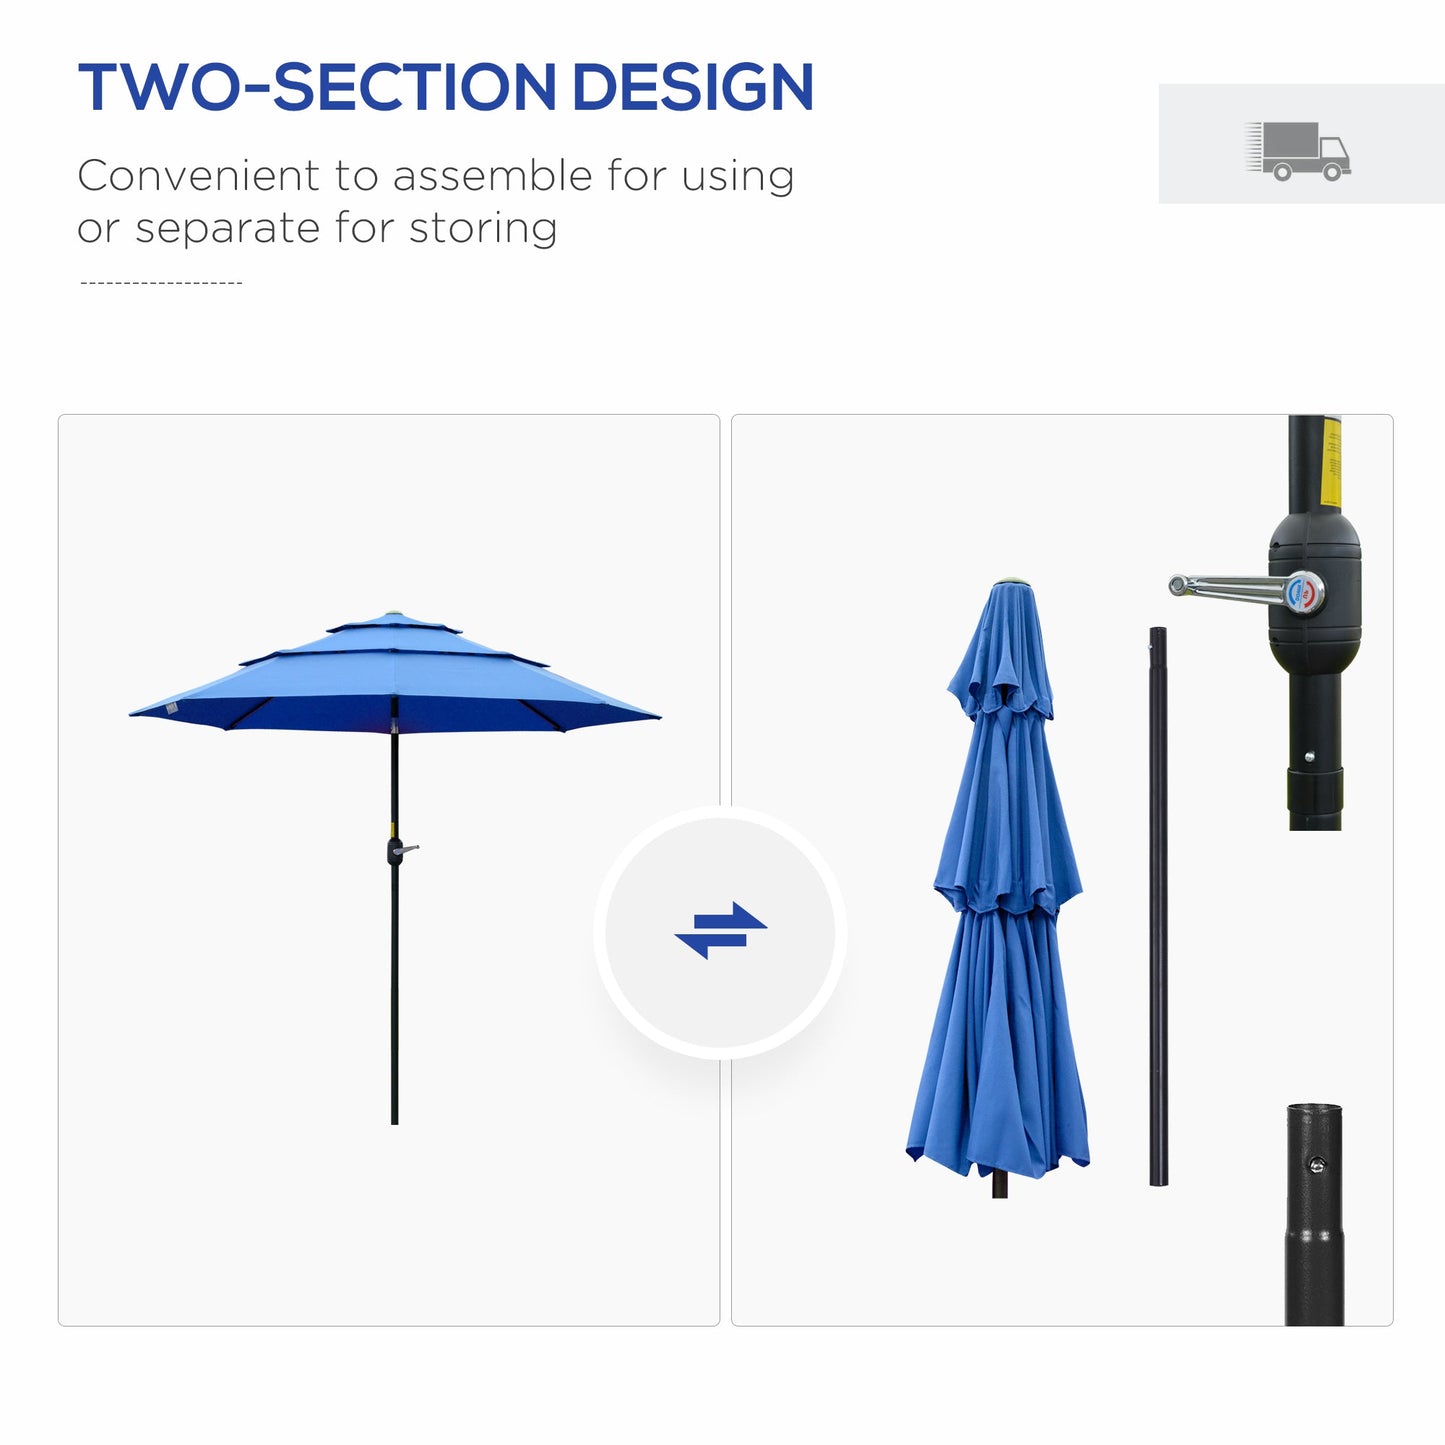 Outdoor and Garden-9' 3-Tier Patio Umbrella, Outdoor Market Umbrella with Crank and Push Button Tilt for Deck, Backyard and Lawn, Dark Blue - Outdoor Style Company